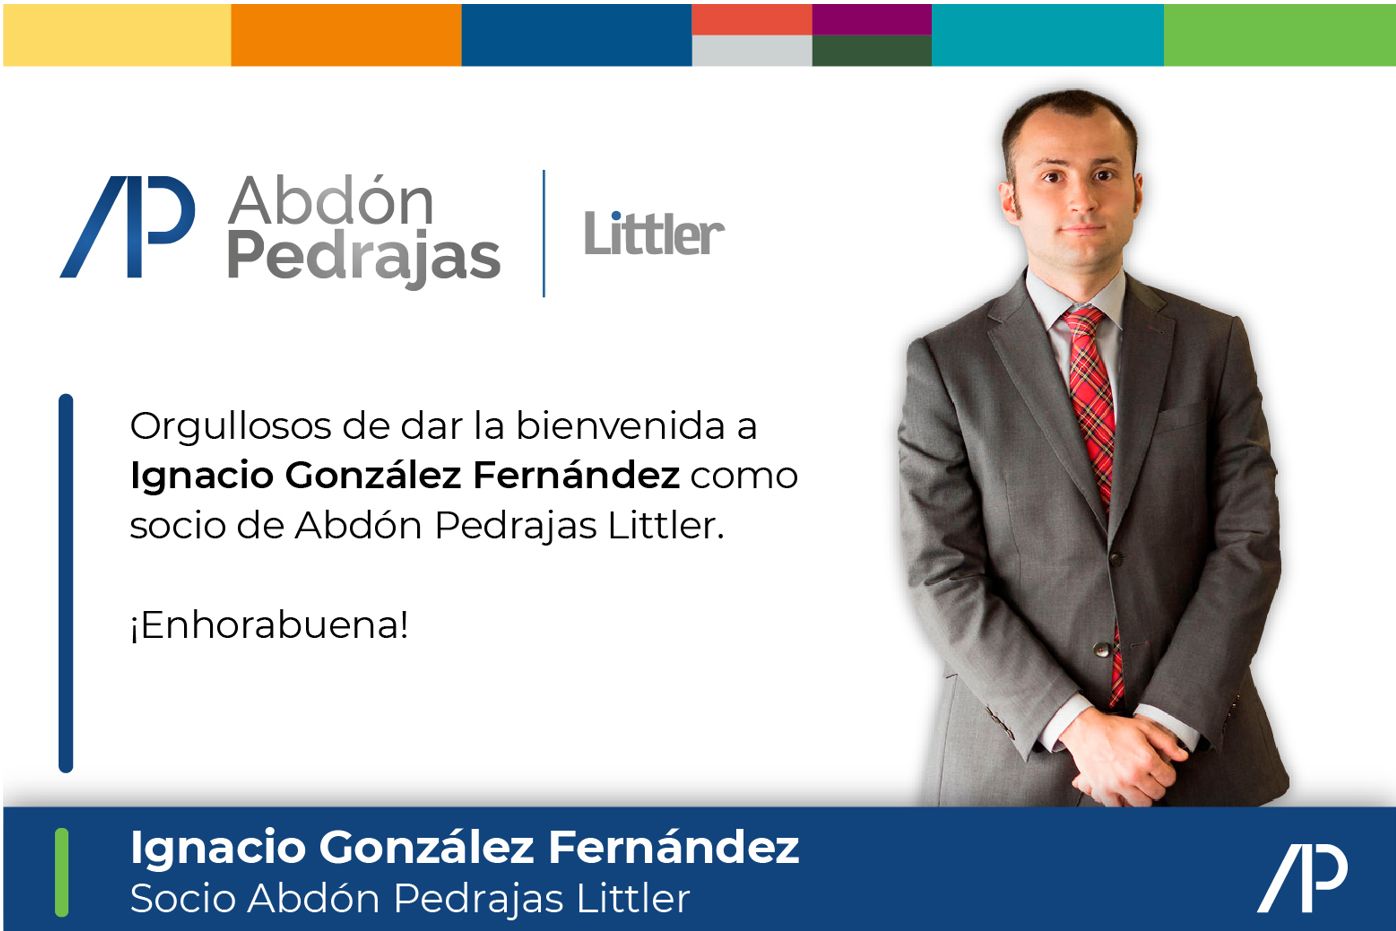  Ignacio González Fernández – Socio Abdón Pedrajas Littler